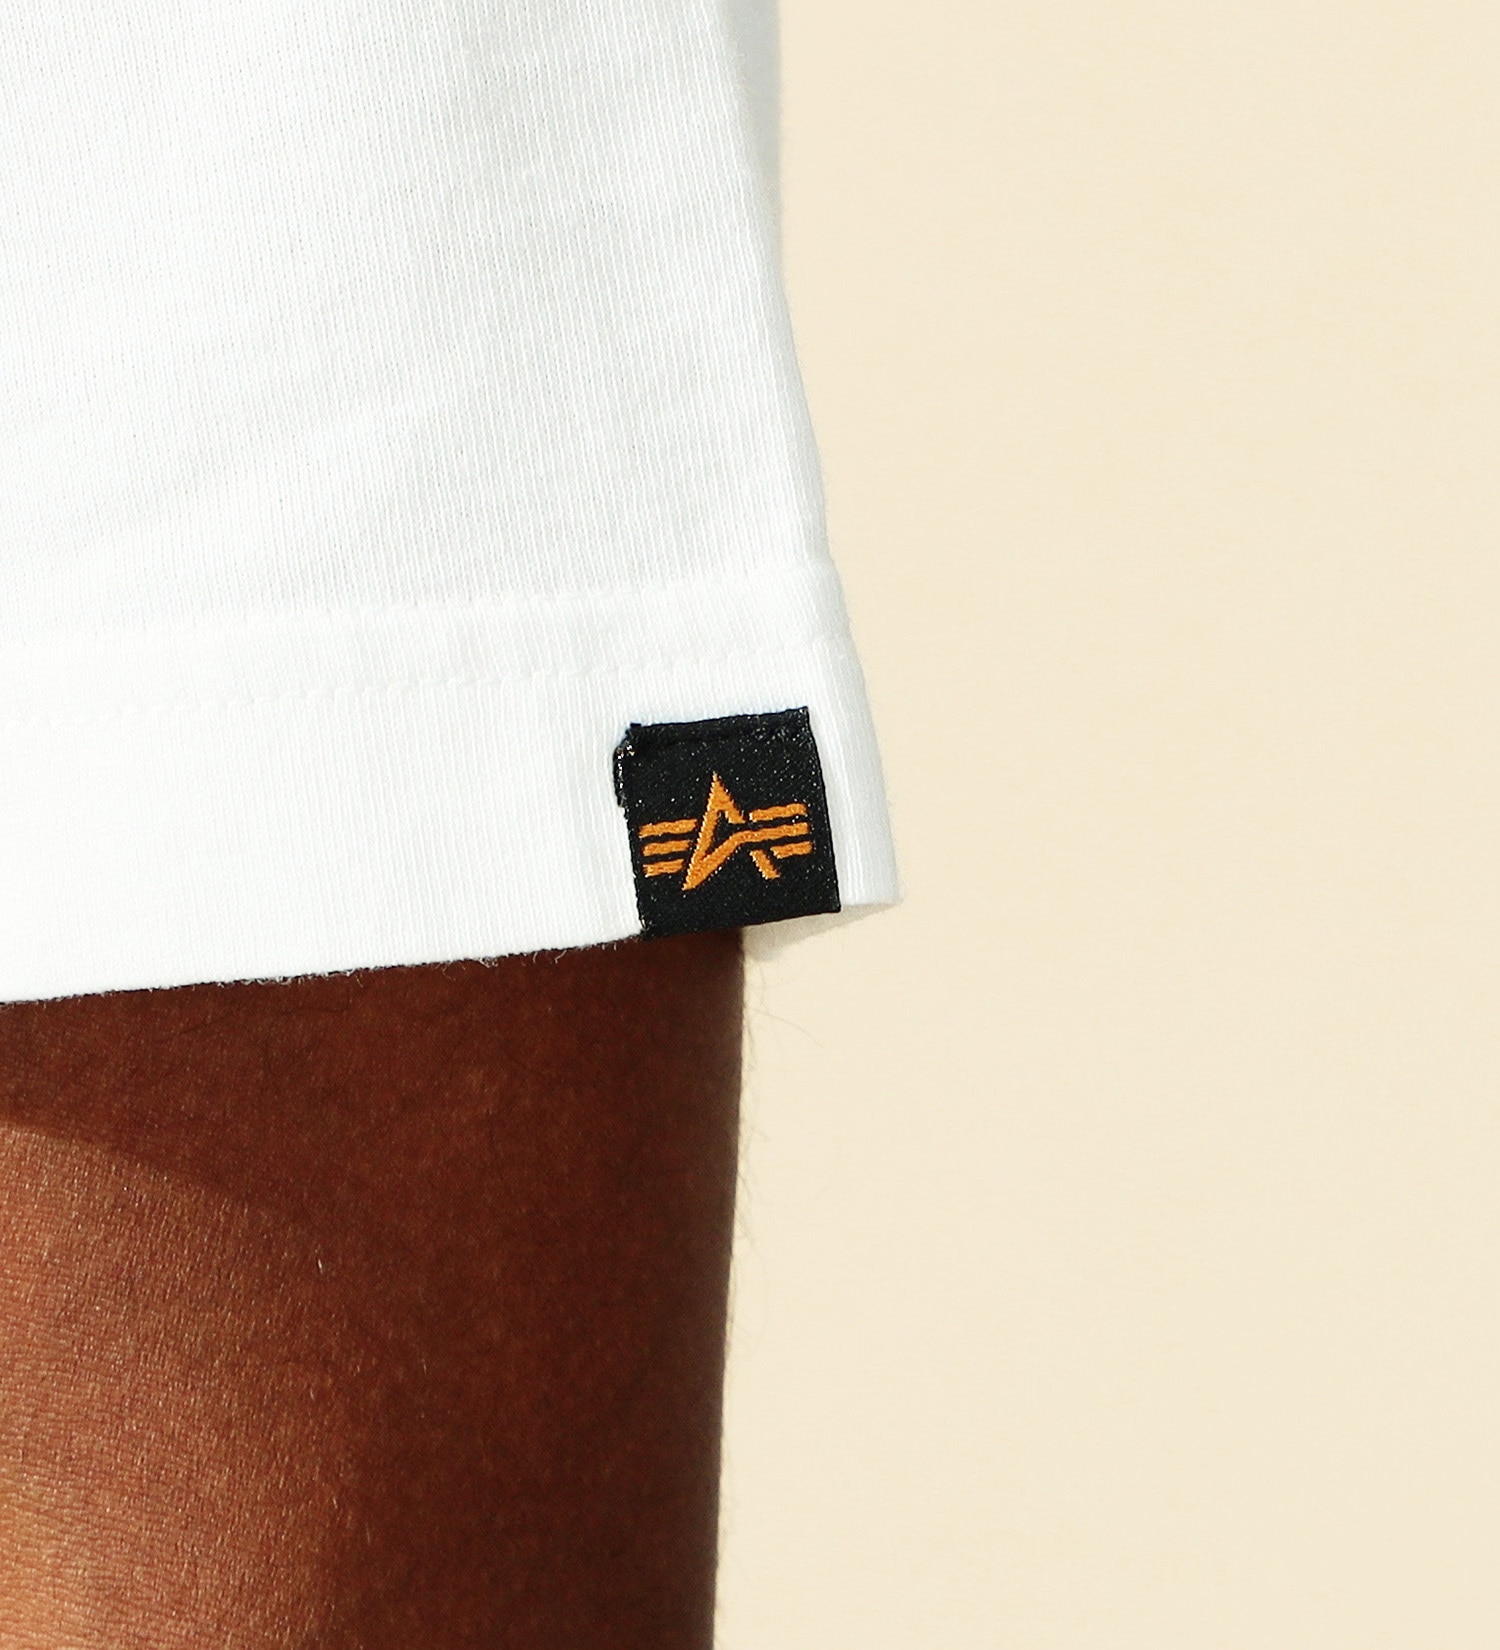 ALPHA(アルファ)のDRESSCODE バックプリントTシャツ 半袖|トップス/Tシャツ/カットソー/メンズ|ホワイト